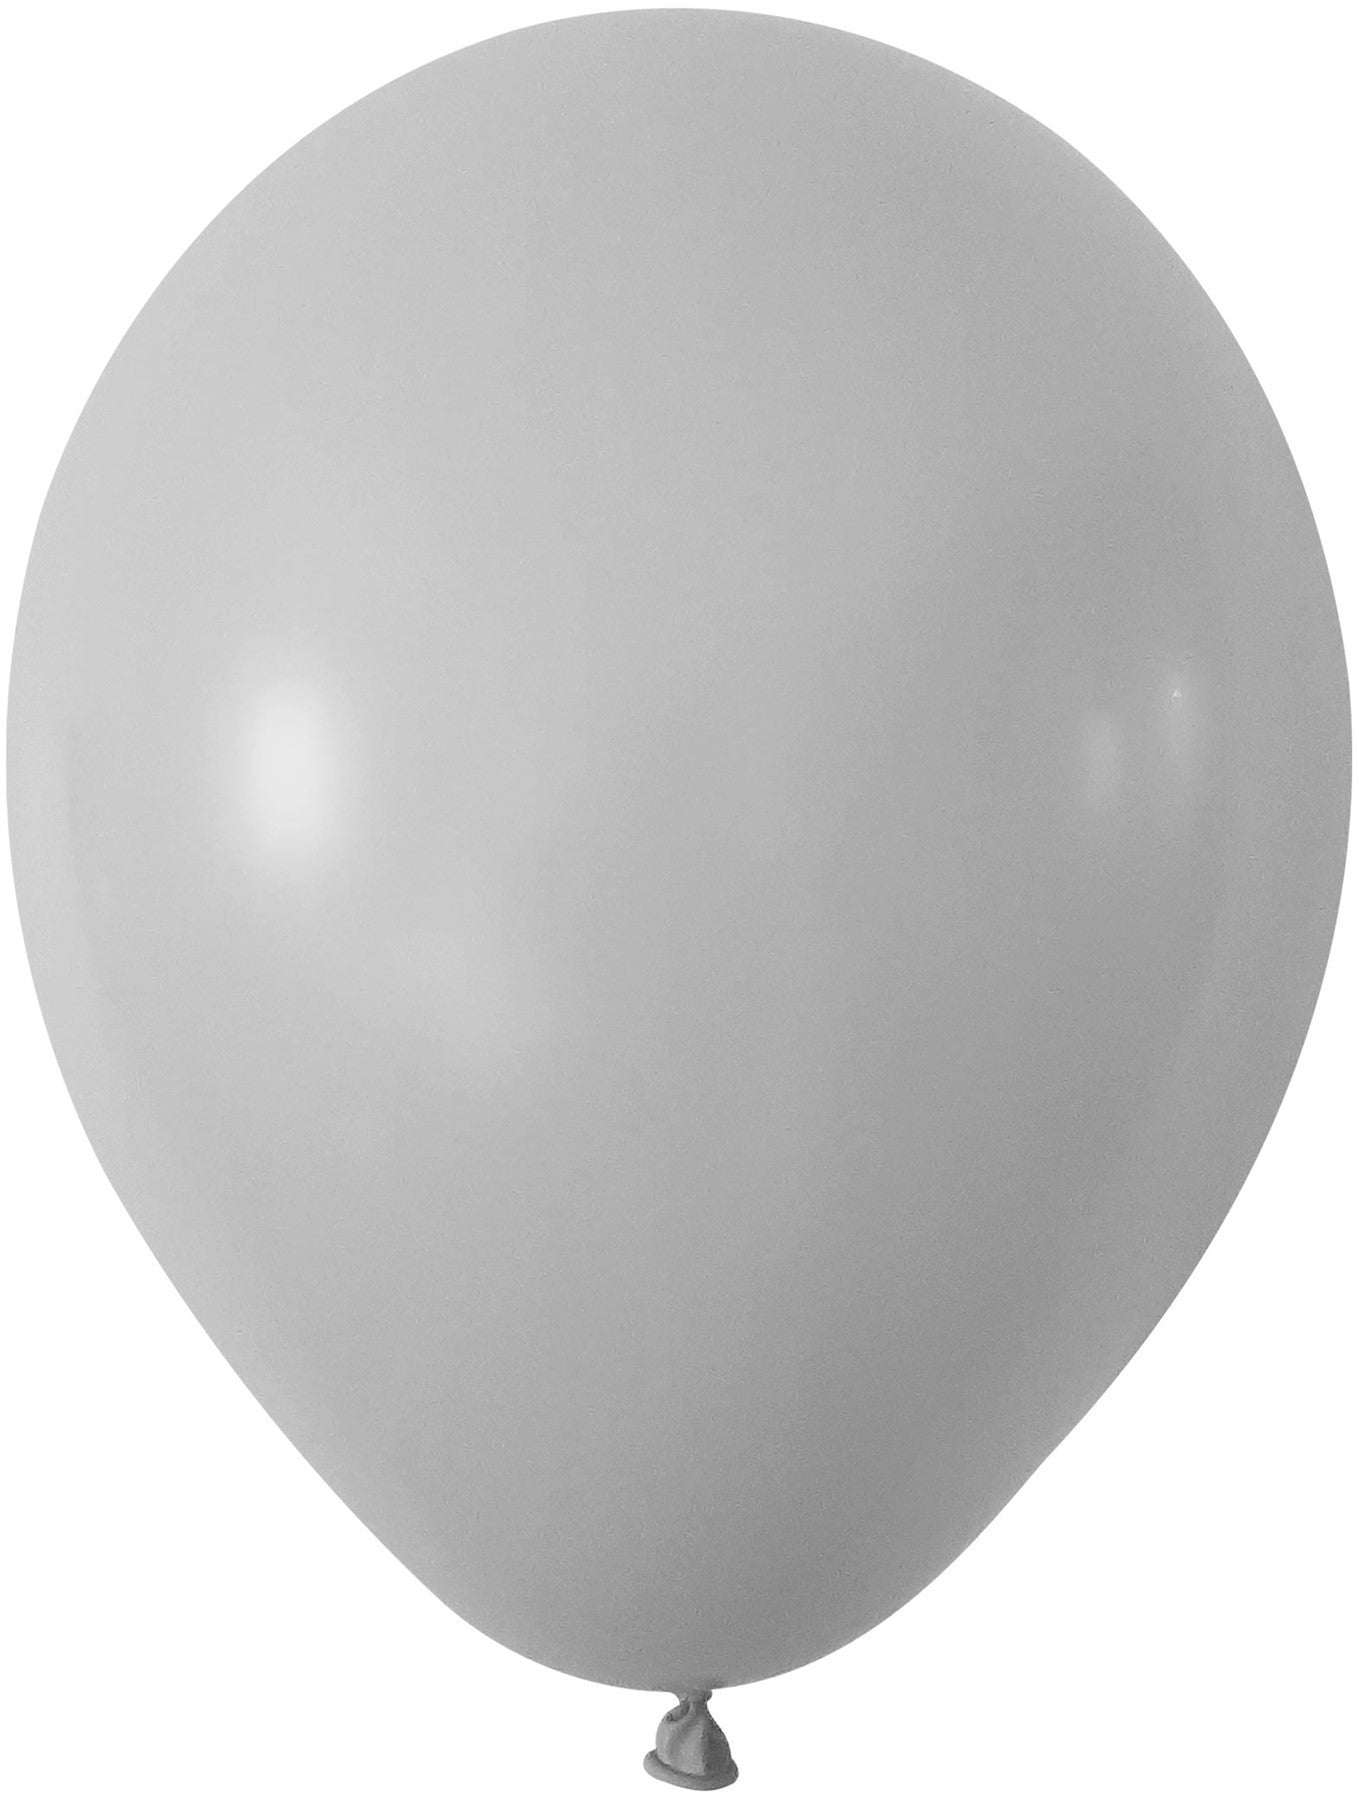 View Grey Latex Balloon 12 inch Pk 100 information